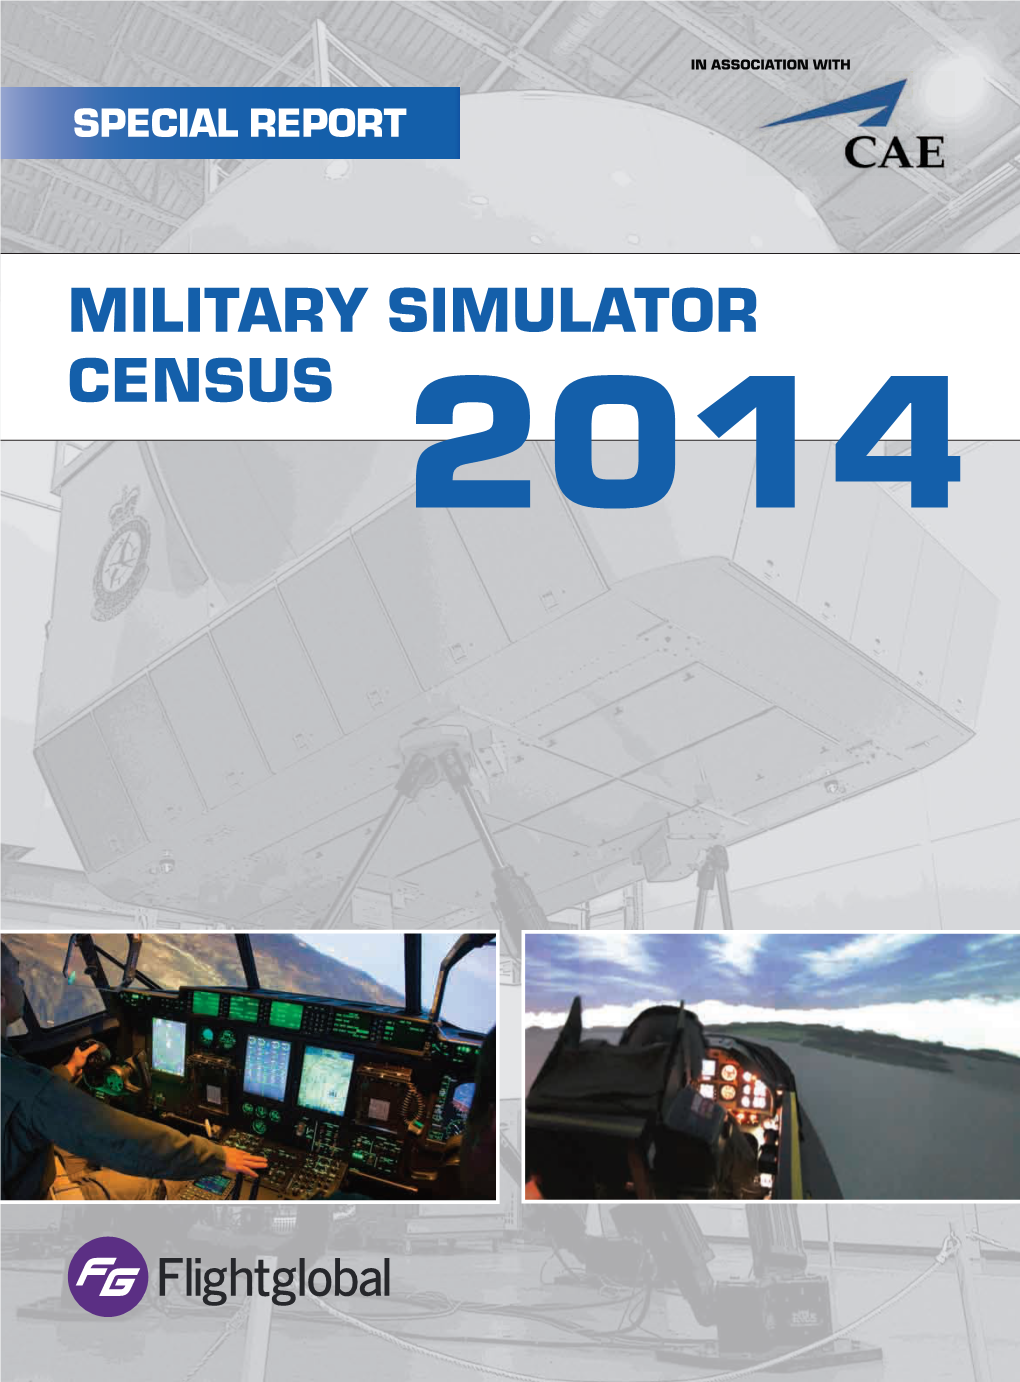 Military Simulator Census 2014 Flightglobal Insight | 3